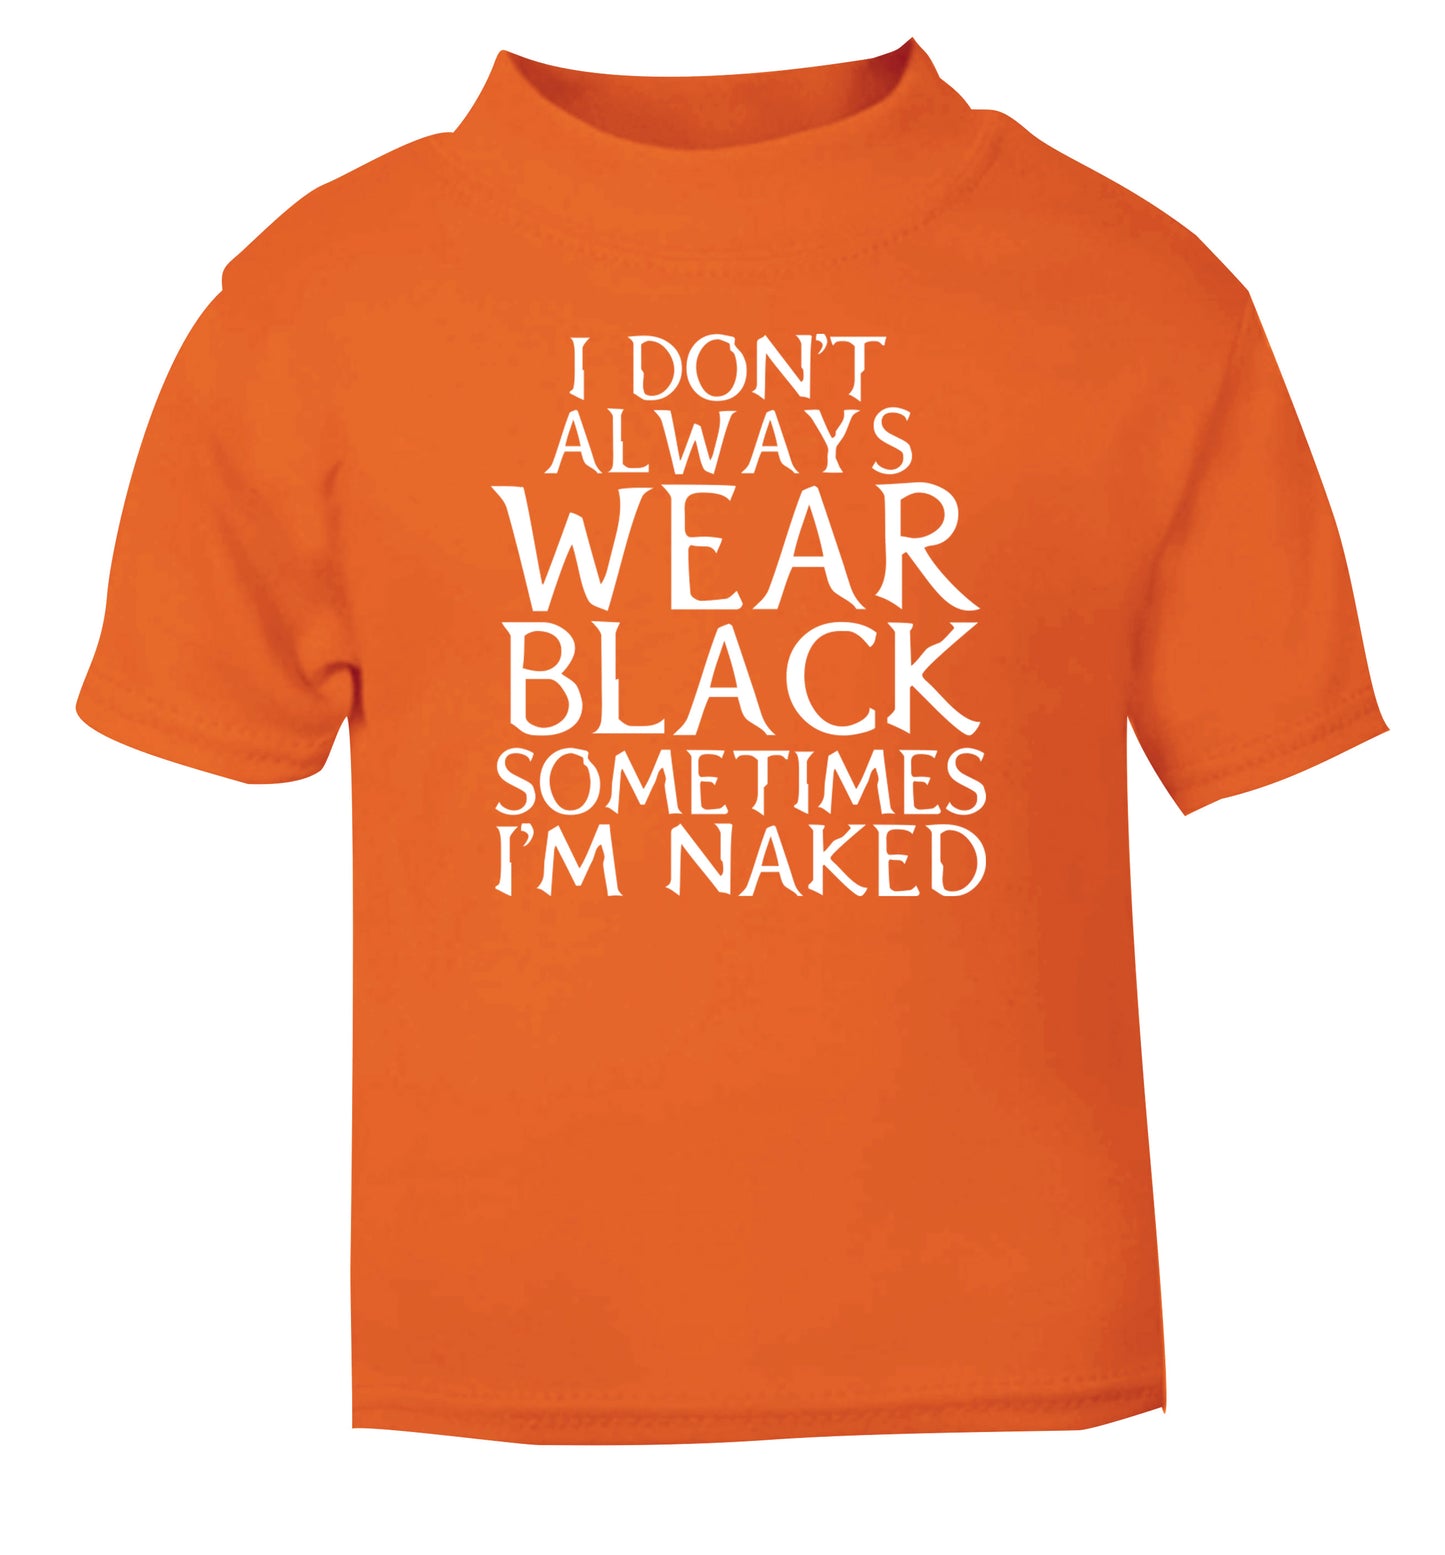 I don't always wear black sometimes I'm naked orange Baby Toddler Tshirt 2 Years